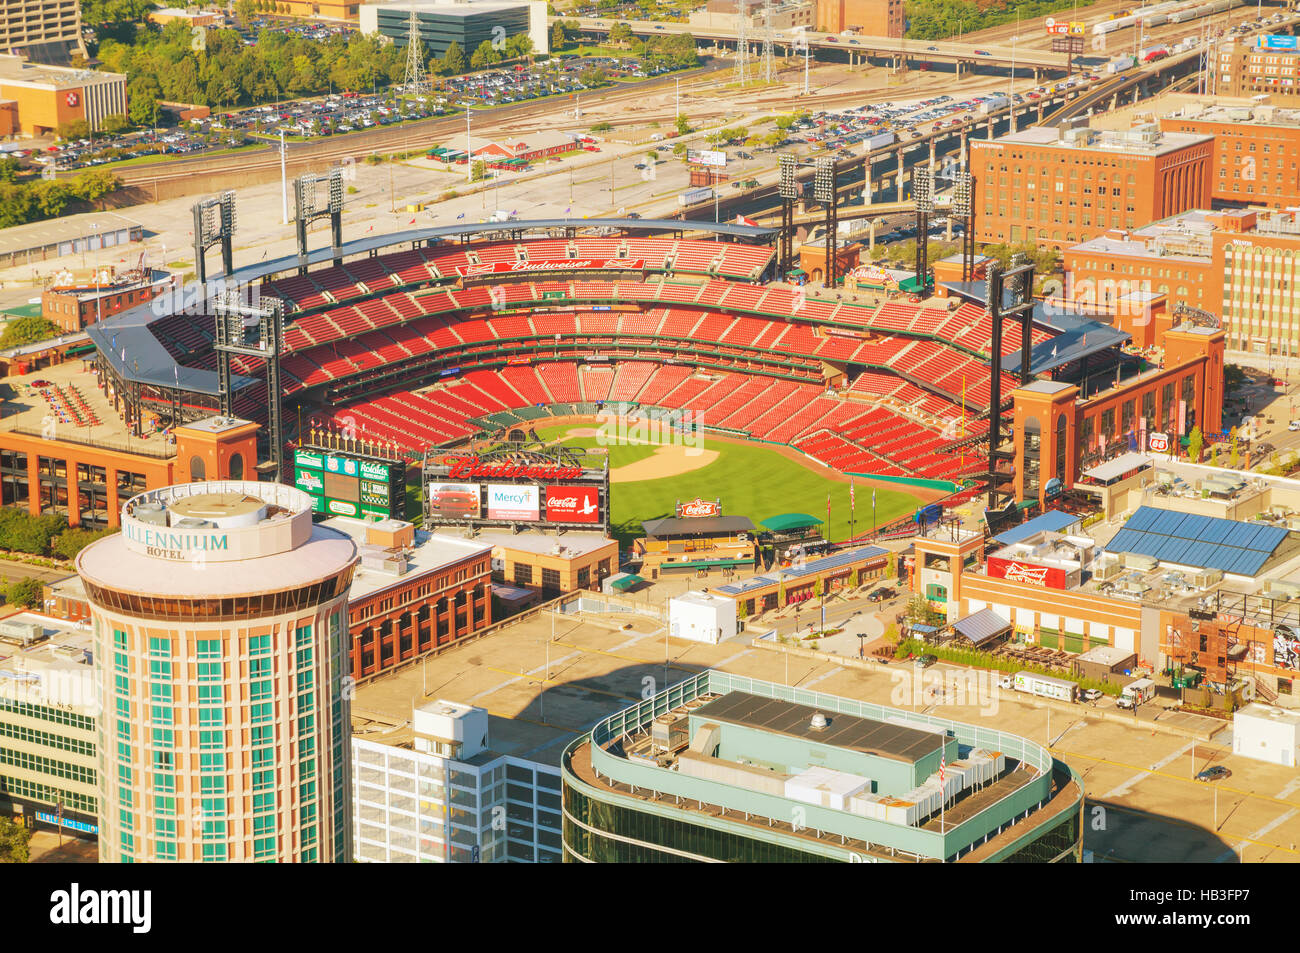 Busch baseball stadium in St Louis, MO Stock Photo